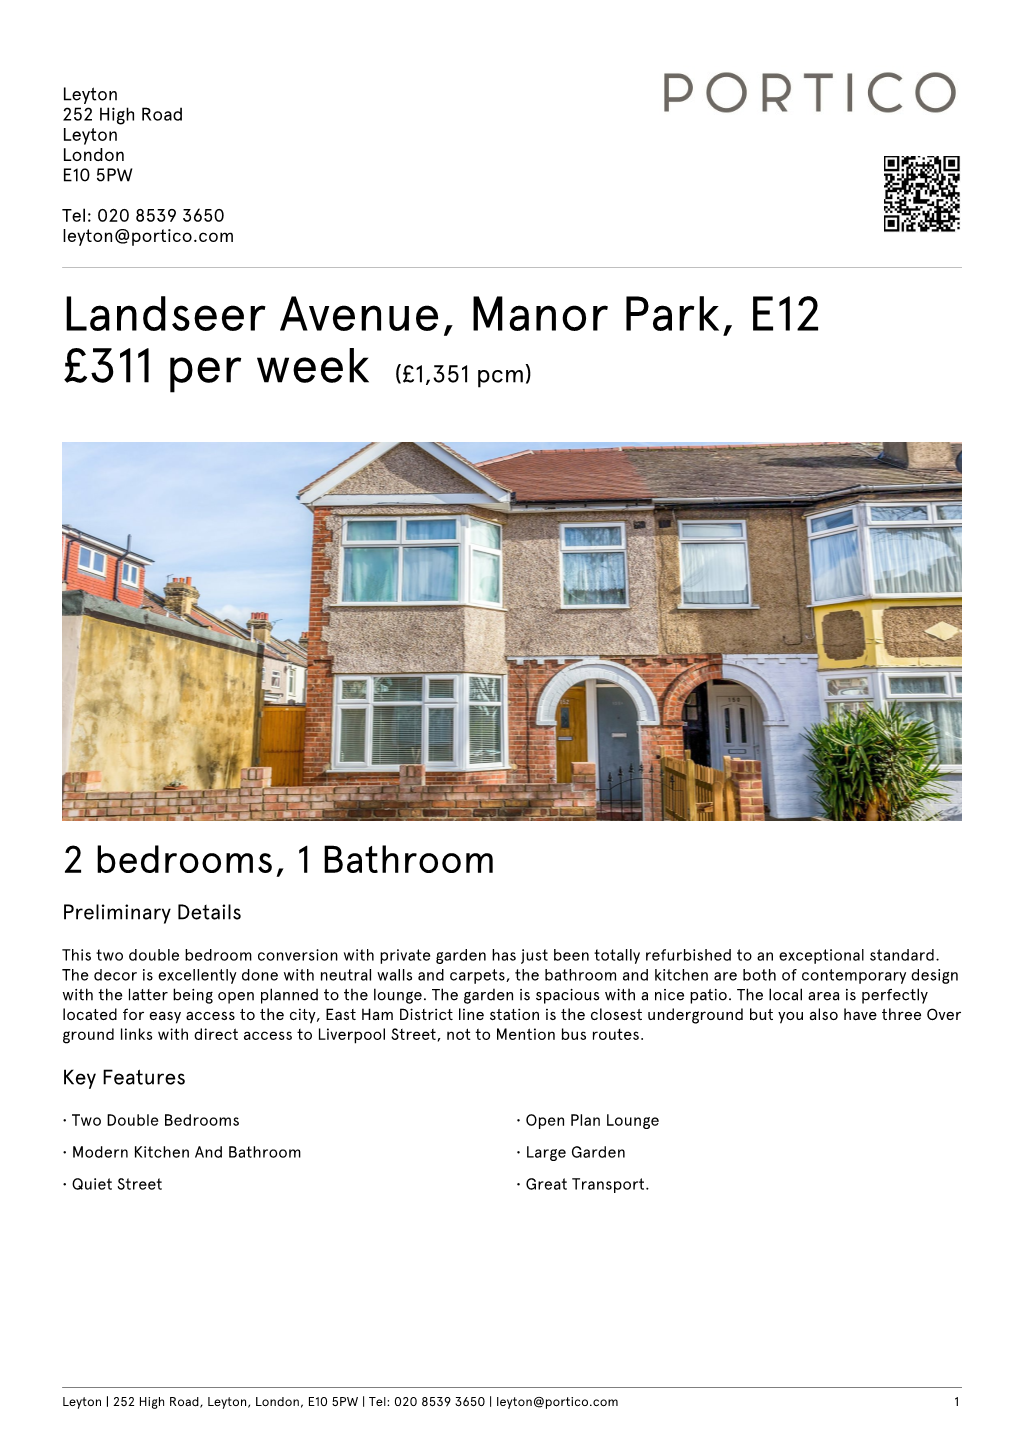 Landseer Avenue, Manor Park, E12 £311 Per Week